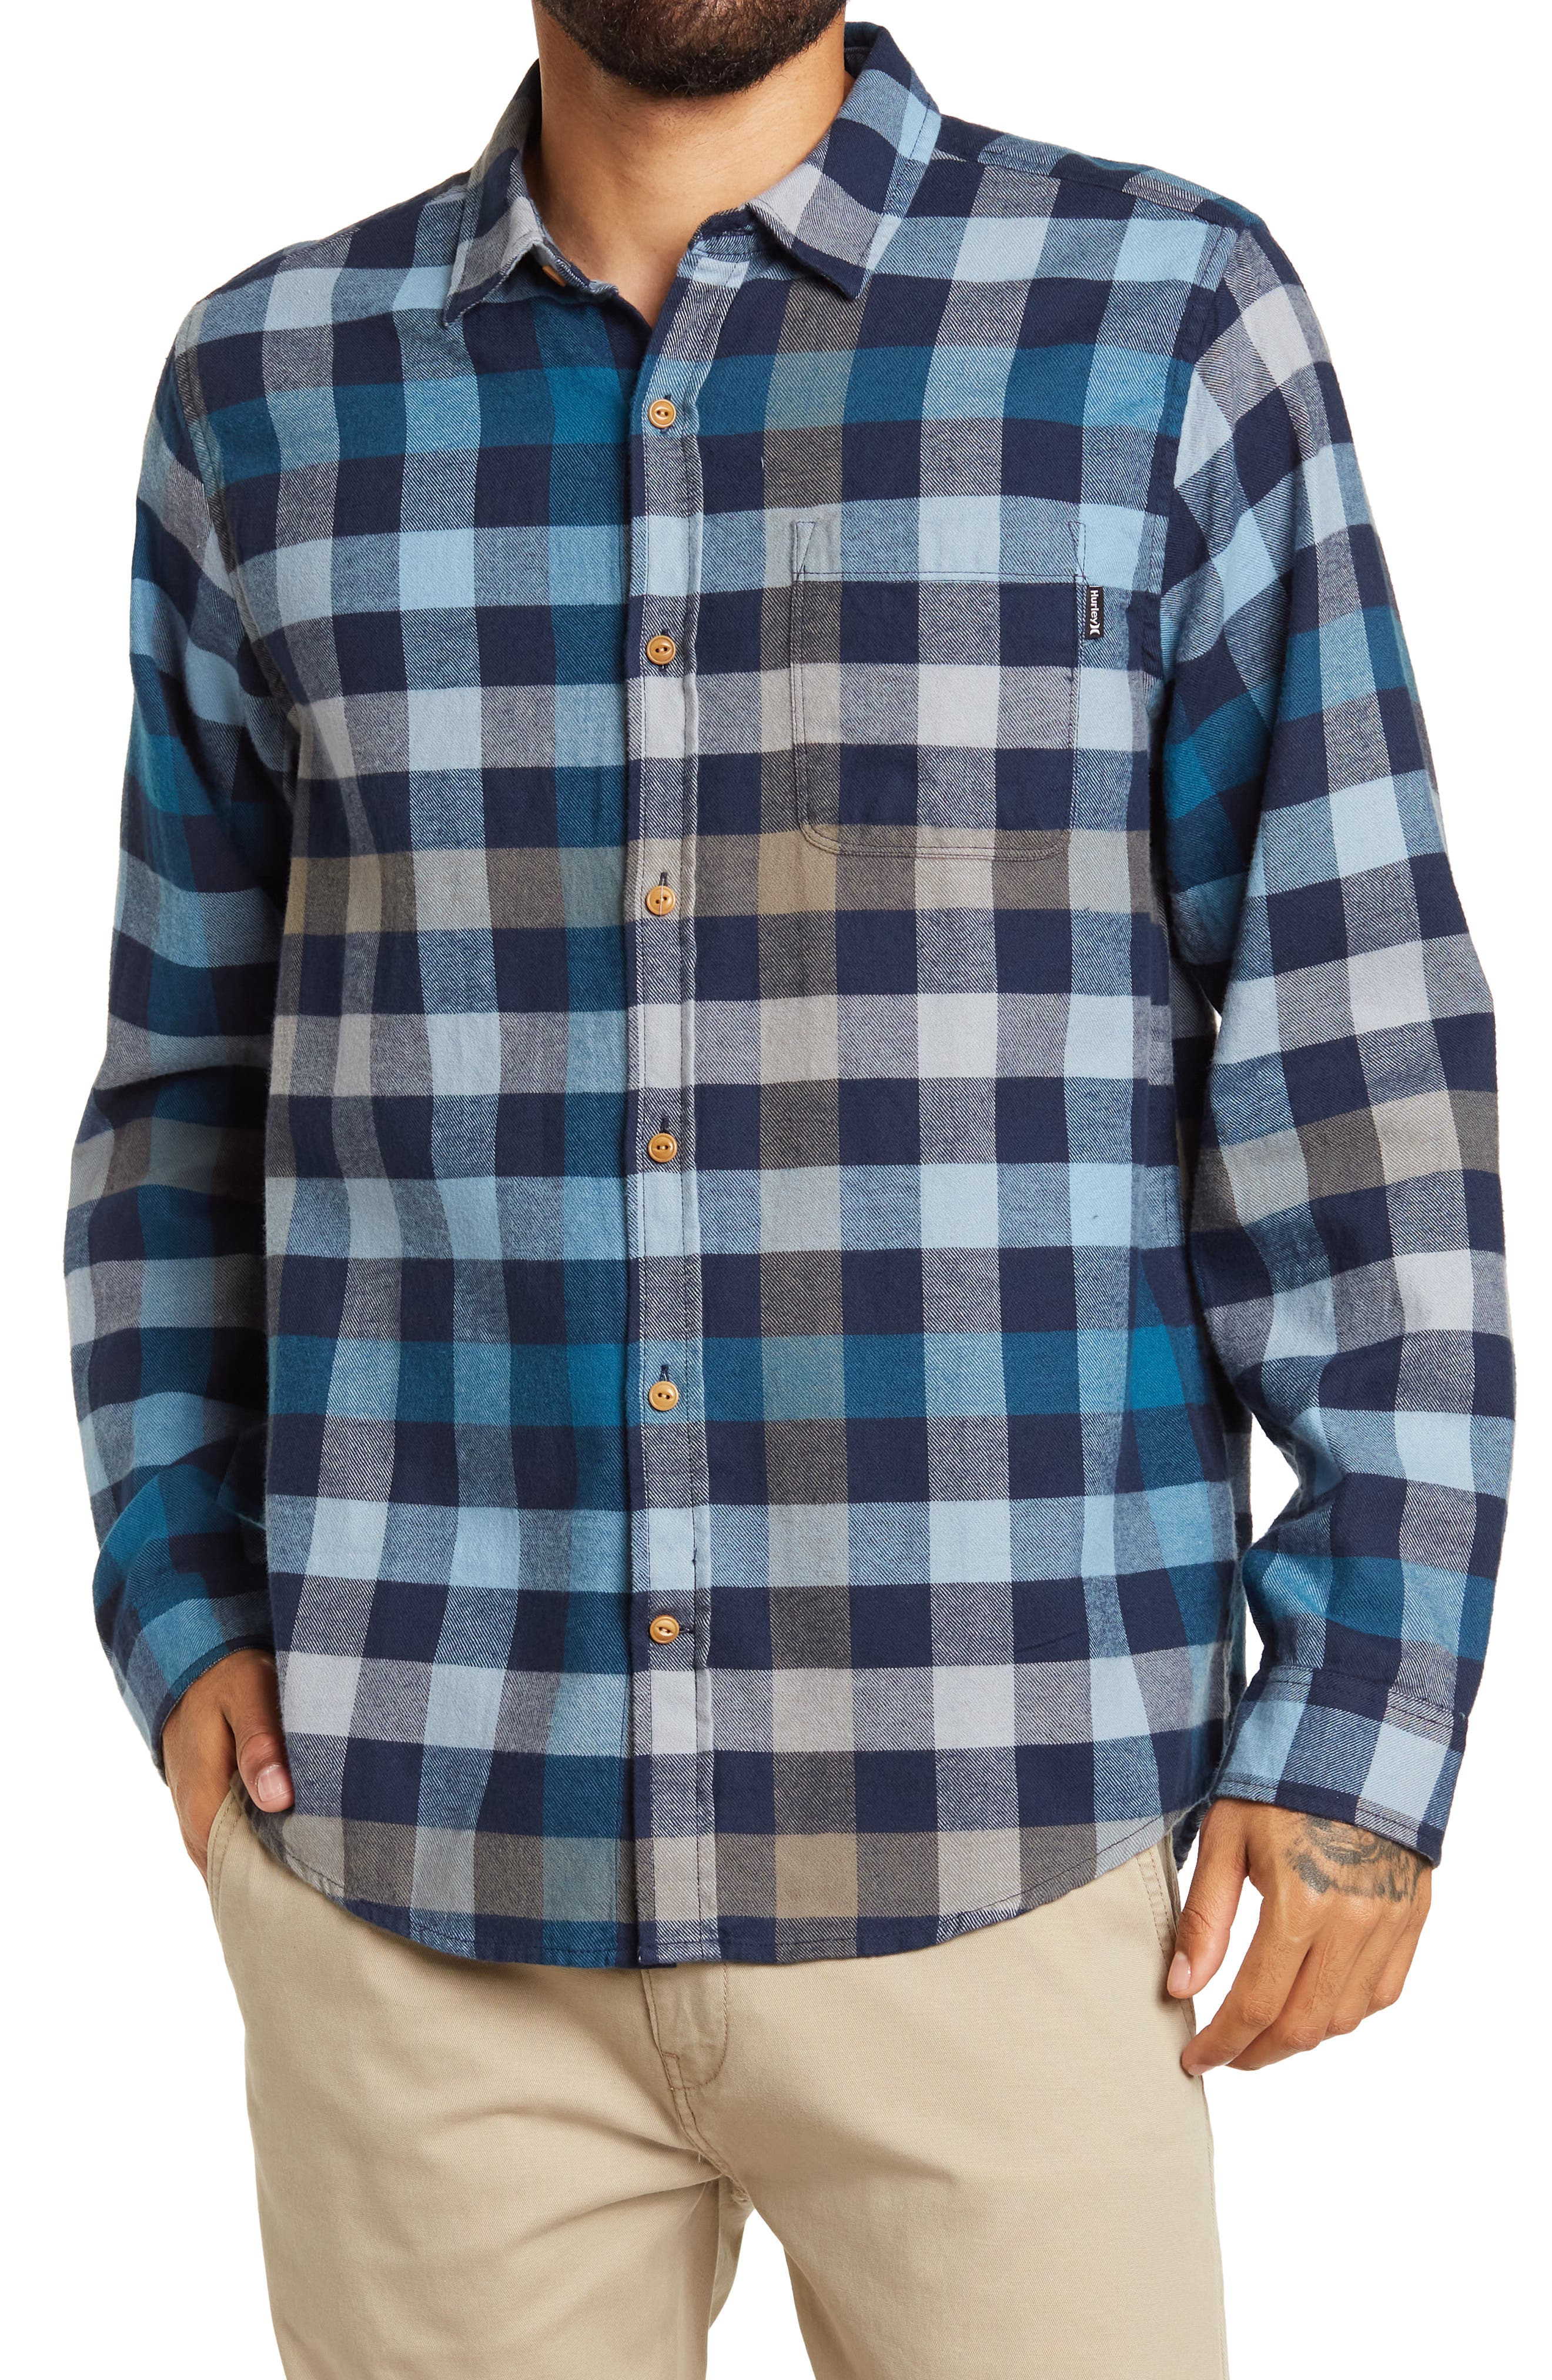 Mfasica Mens Long Sleeve Plaid Pattern Spring/Fall Casual Square Collor Dress Shirt 